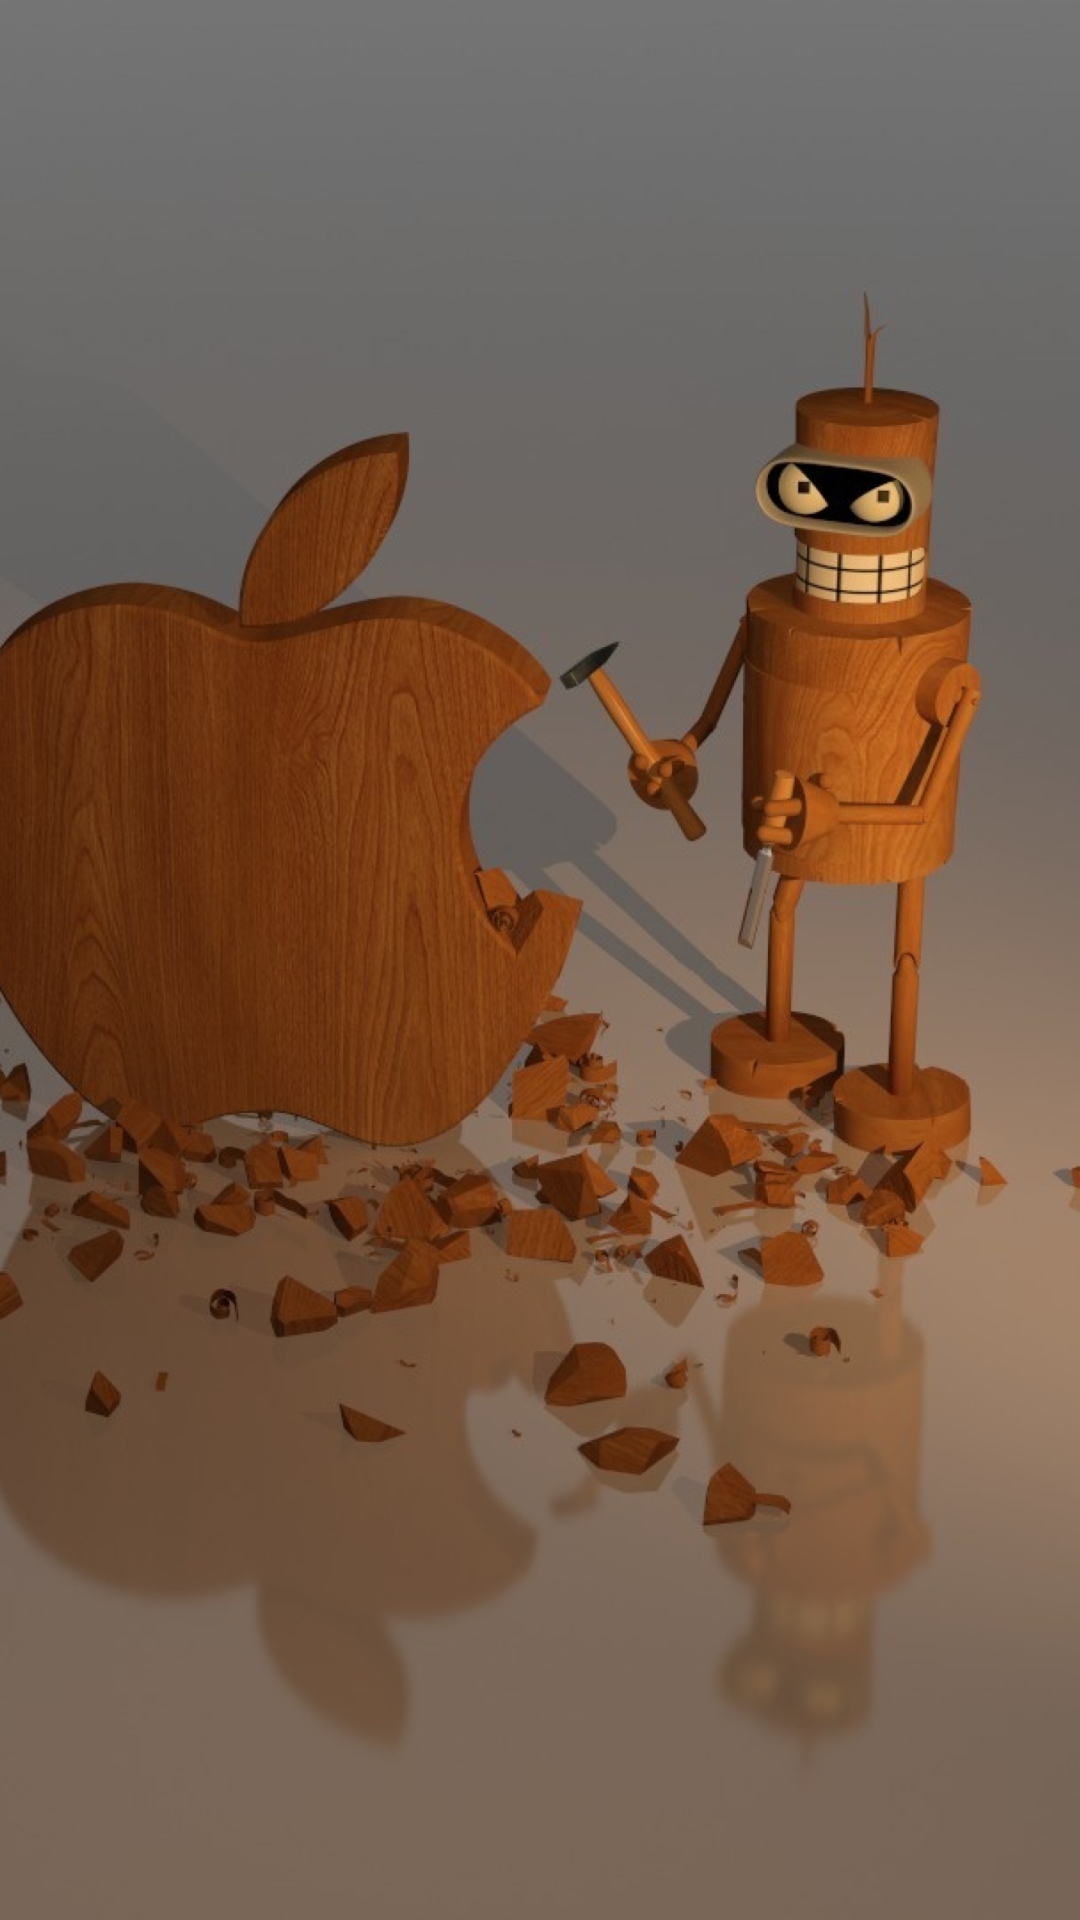 Das Bender Against Apple Wallpaper 1080x1920